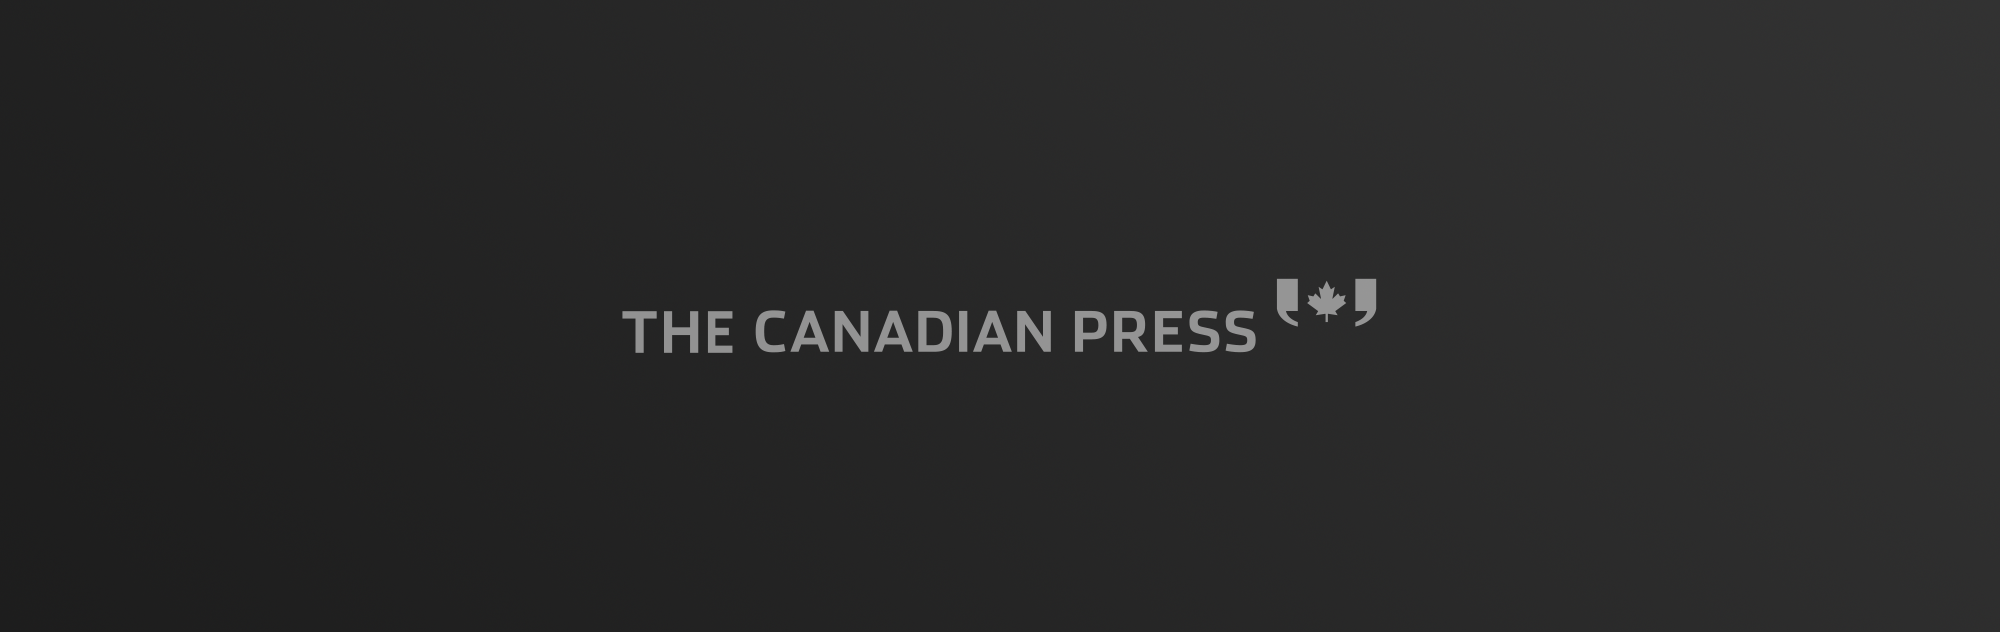 The Canadian Press logo on dark gradient background